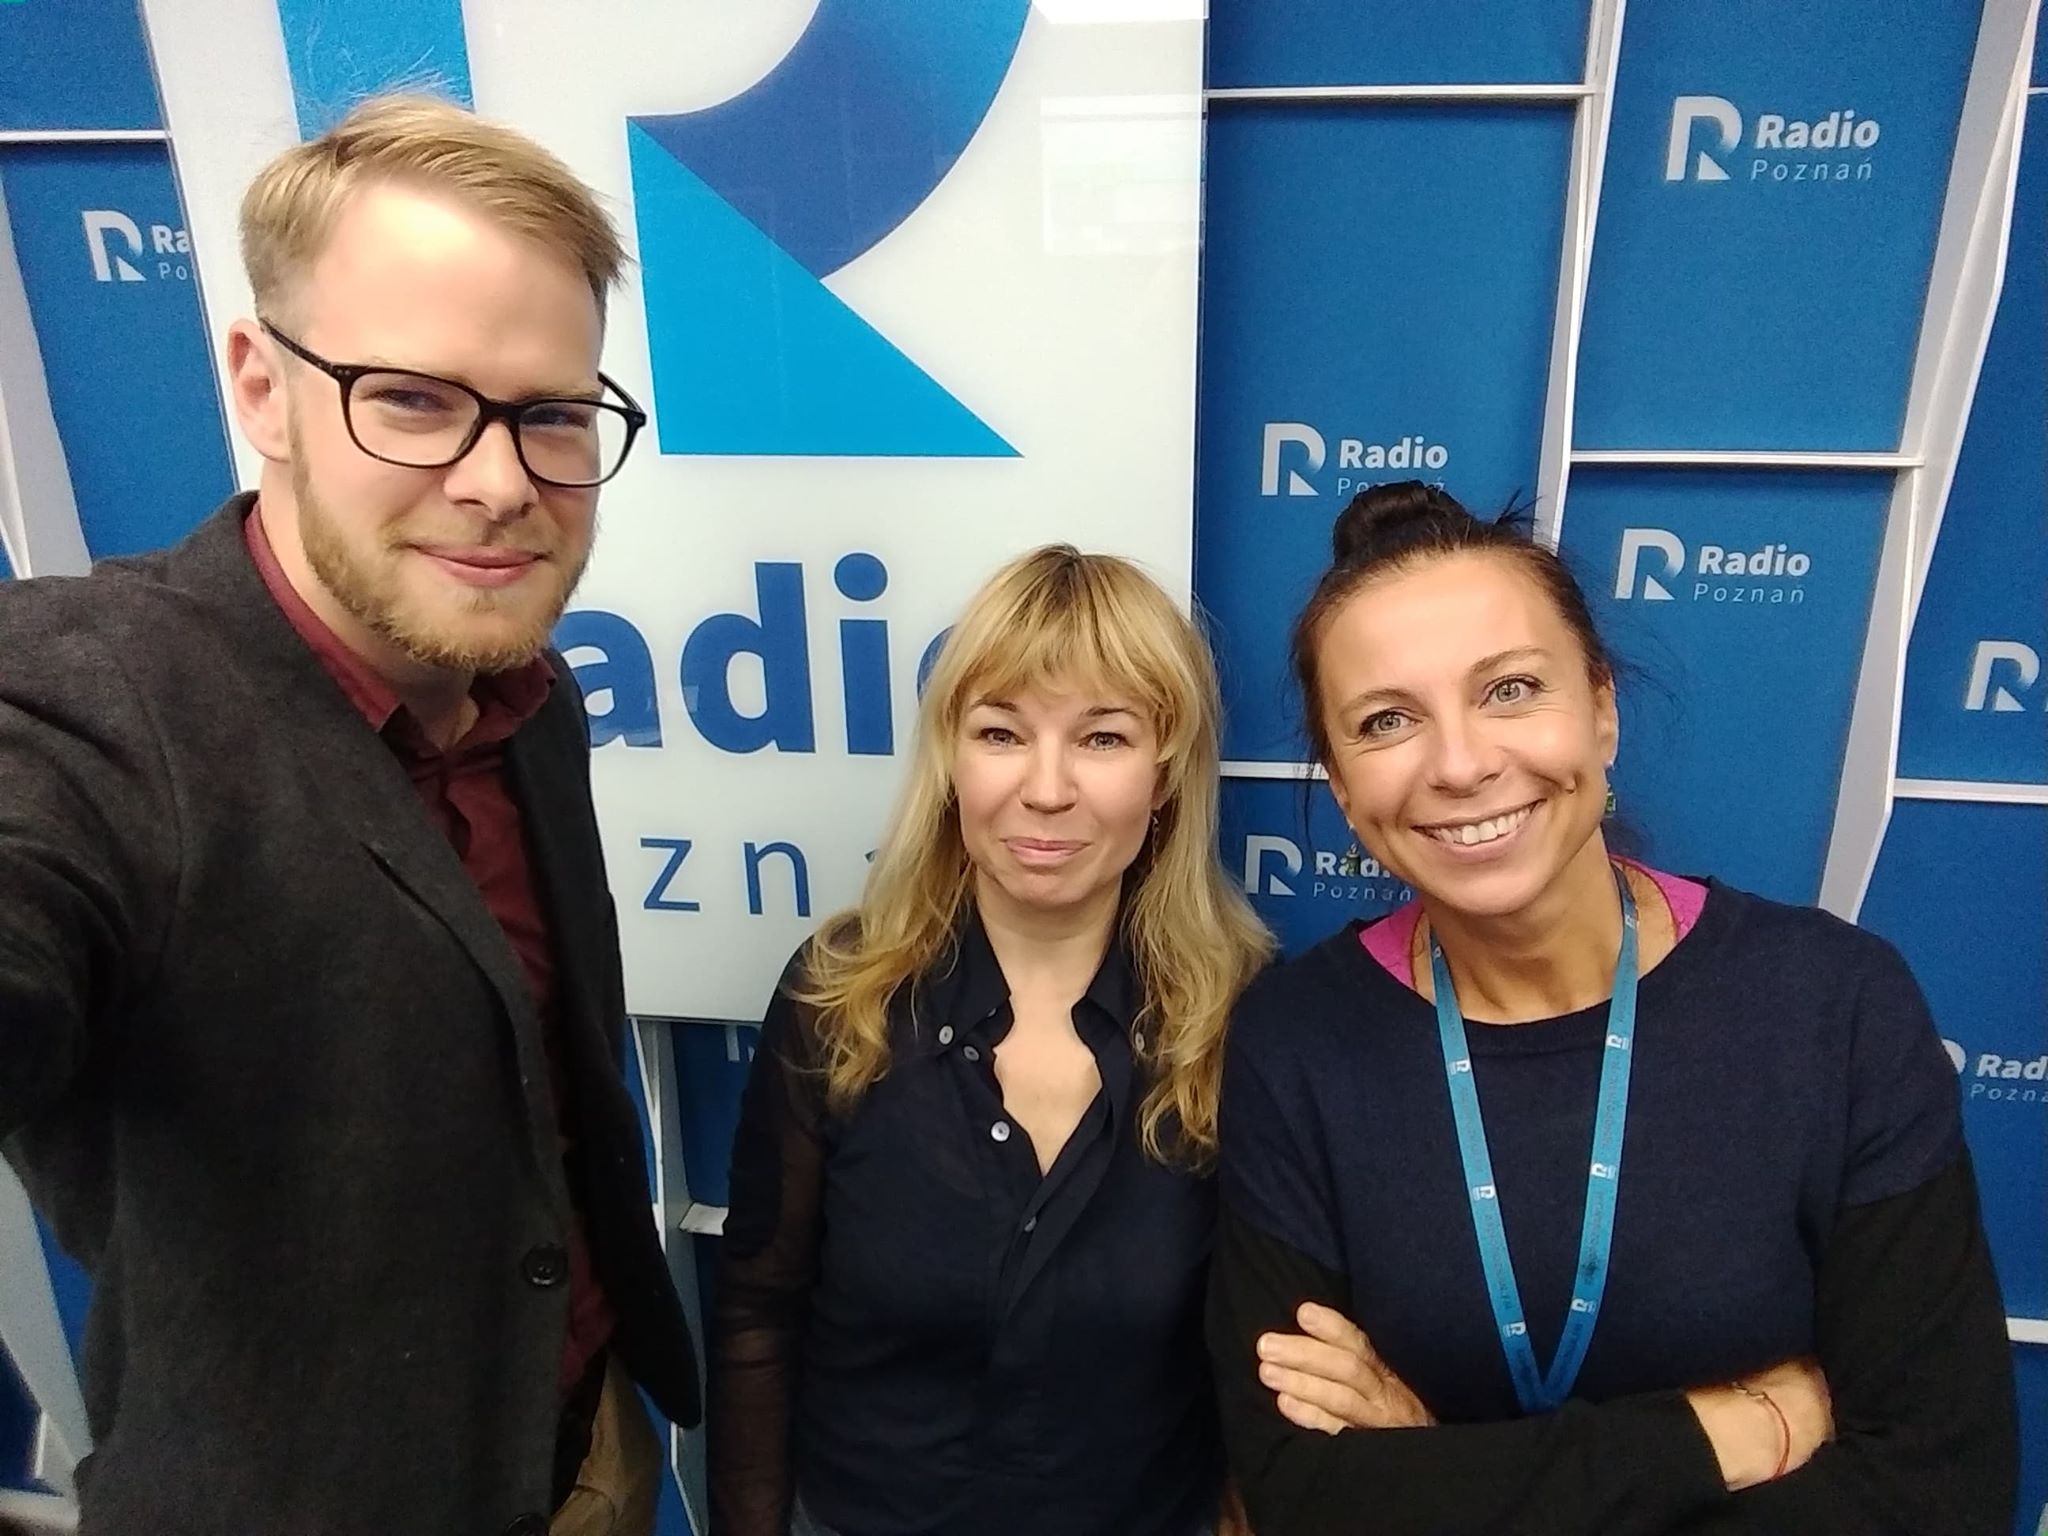 malaczarna - Radio Poznań